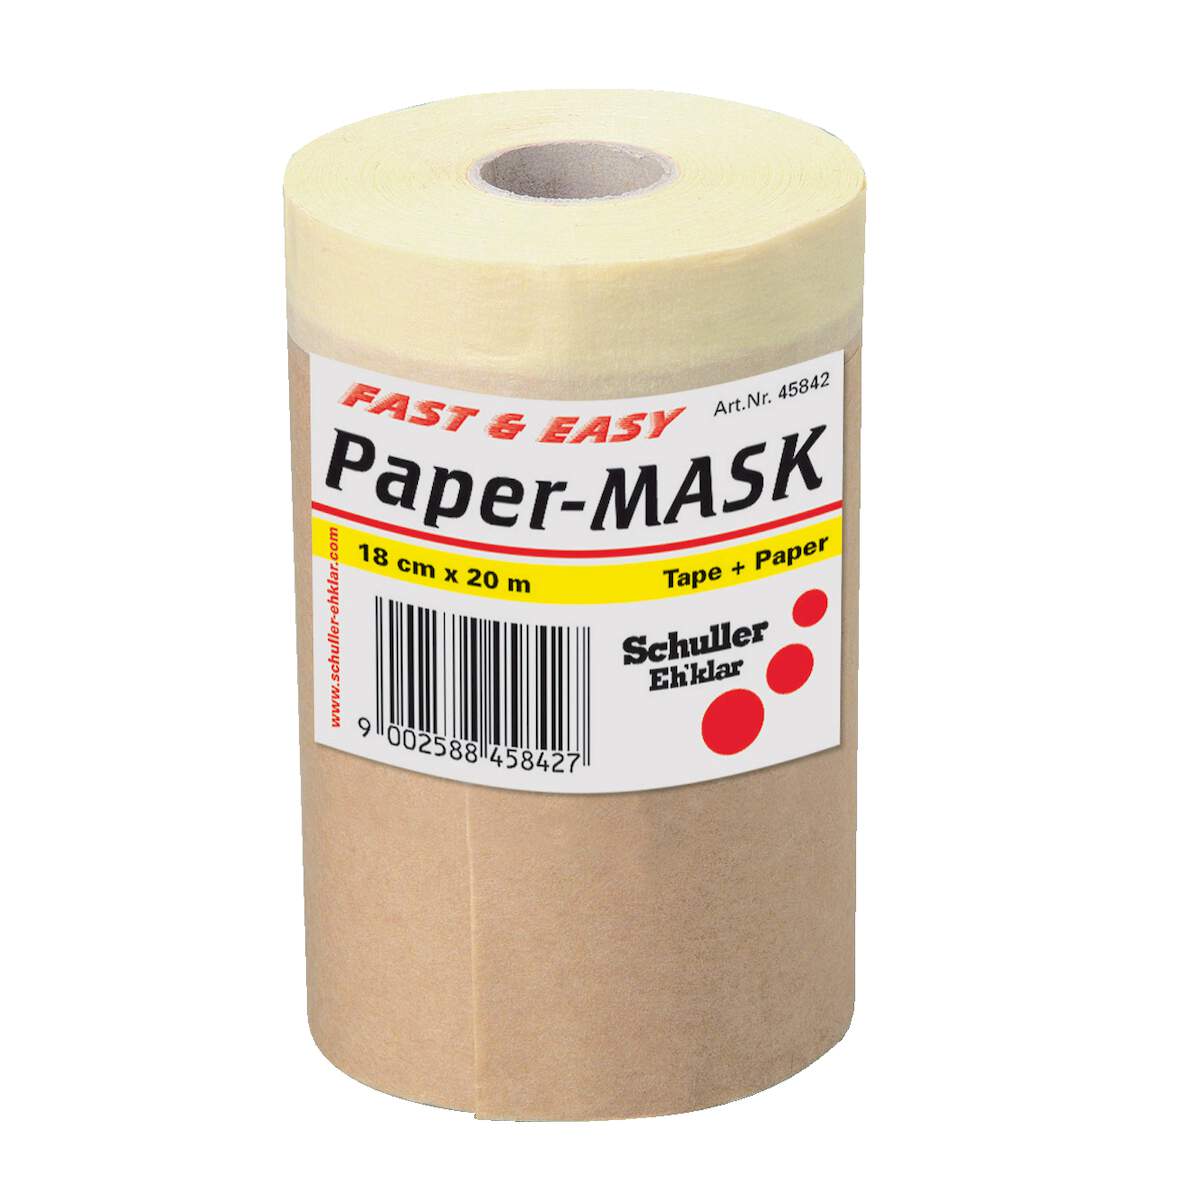 1068339 - Paper-Mask 18cm x 20m 